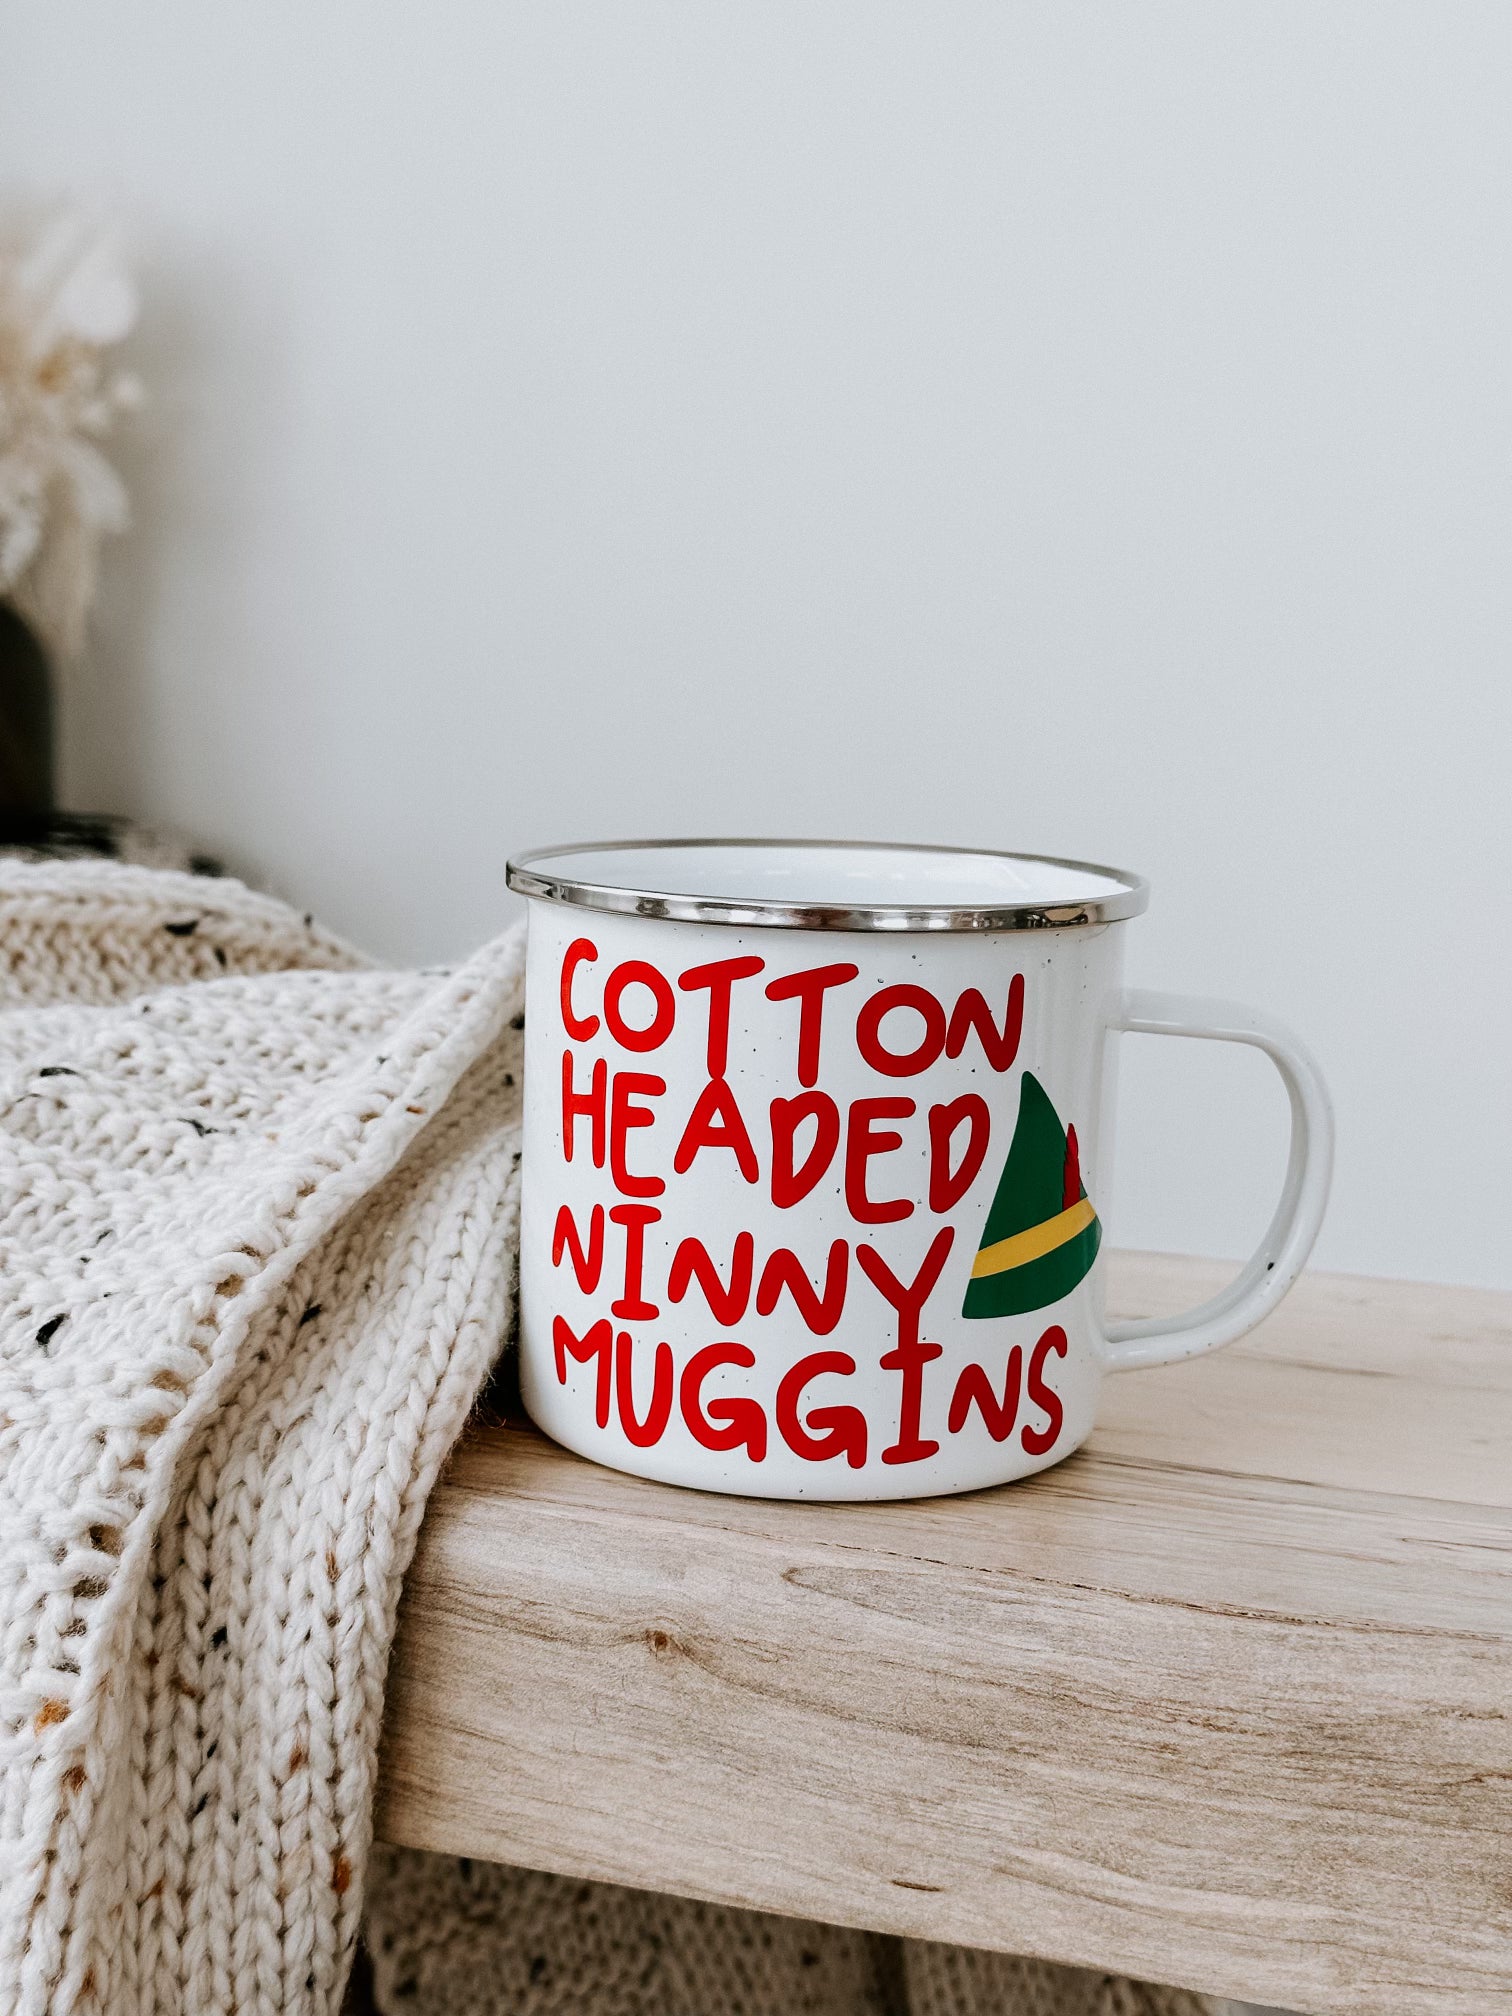 image of Cotton Headed Ninny Muggins Mug